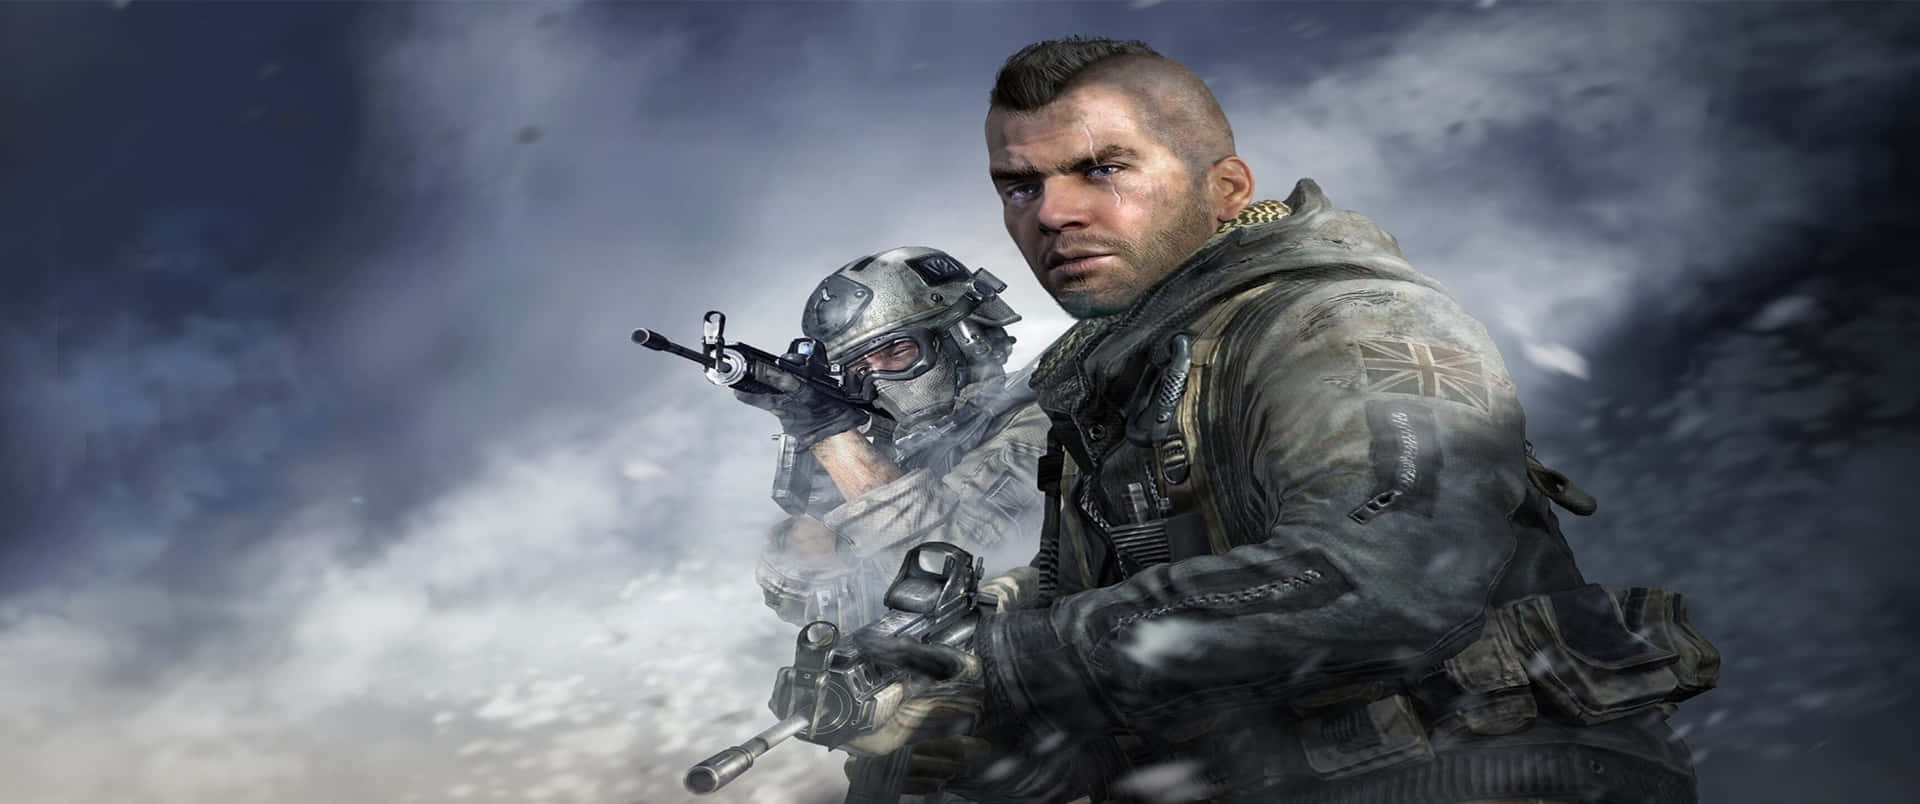 Fondode Pantalla De Call Of Duty Modern Warfare De Close-up Mactavish En Resolución De 3440x1440p.